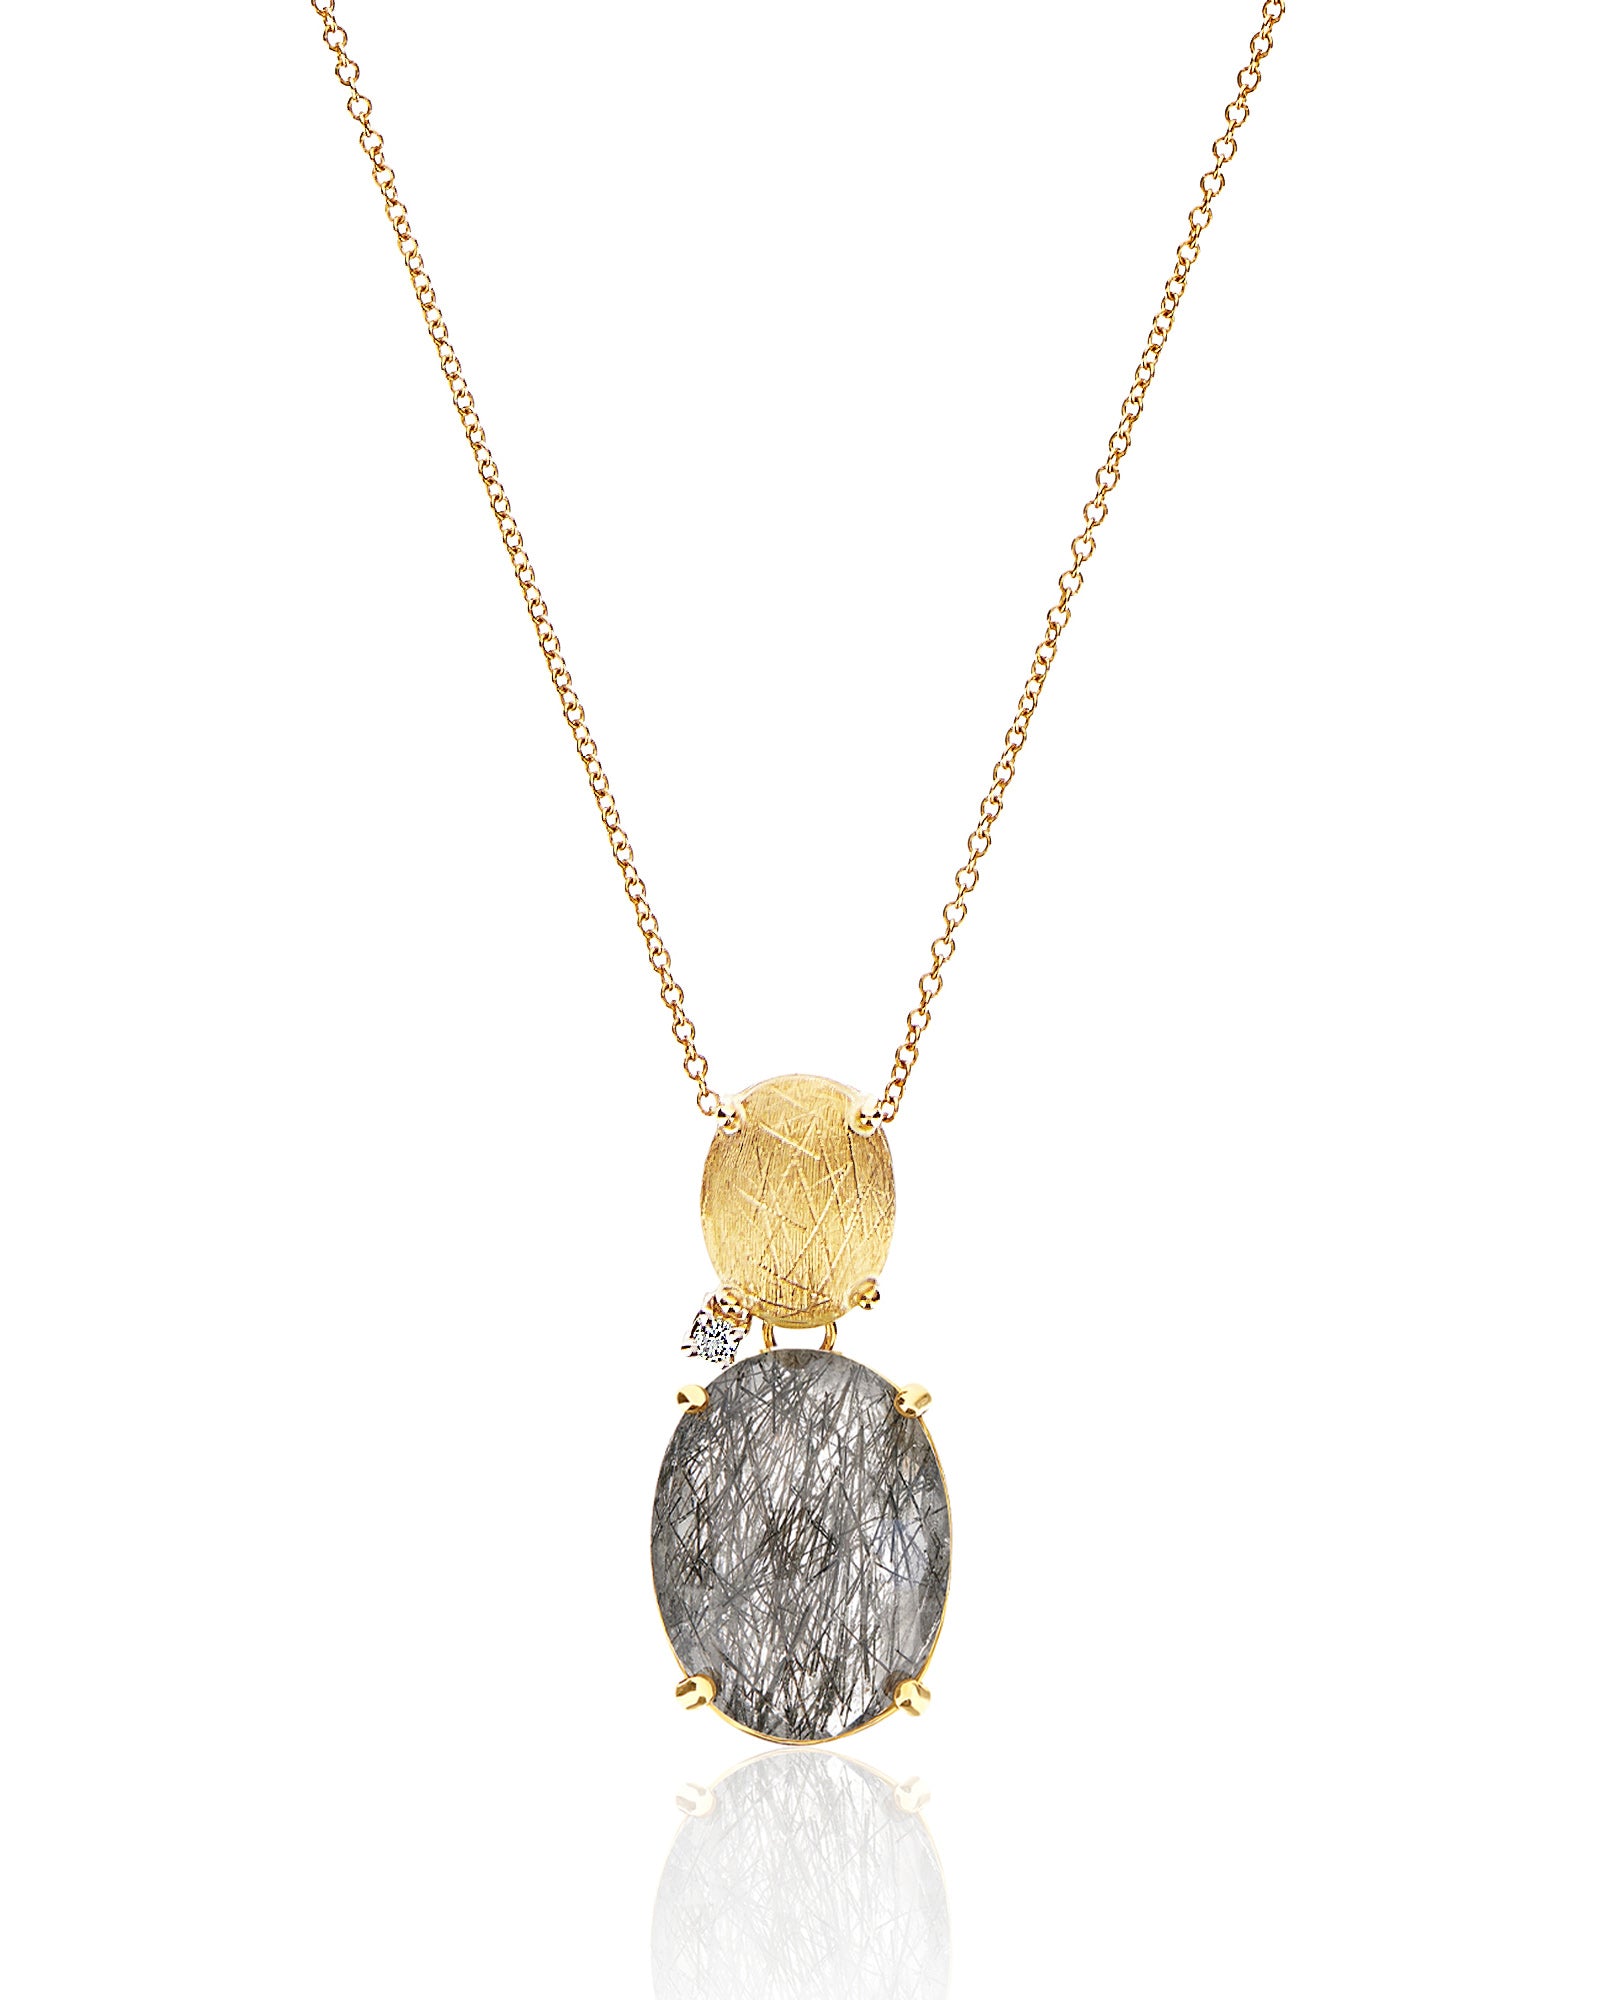 "Ipanema" grey rutilated quartz necklace